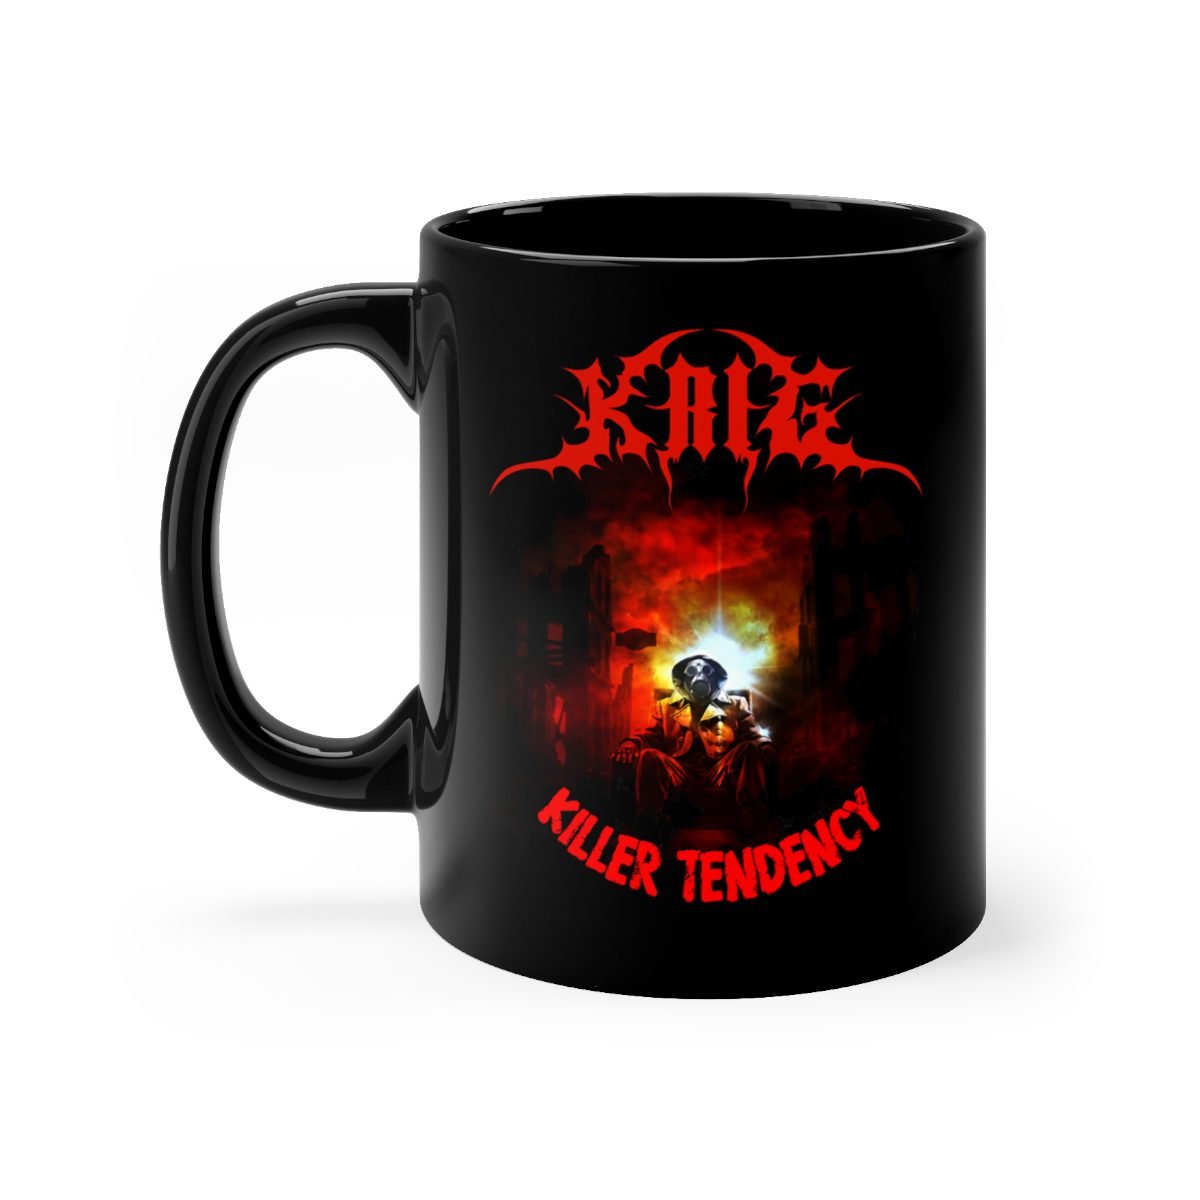 Krig – Killer Tendency 11oz Black mug